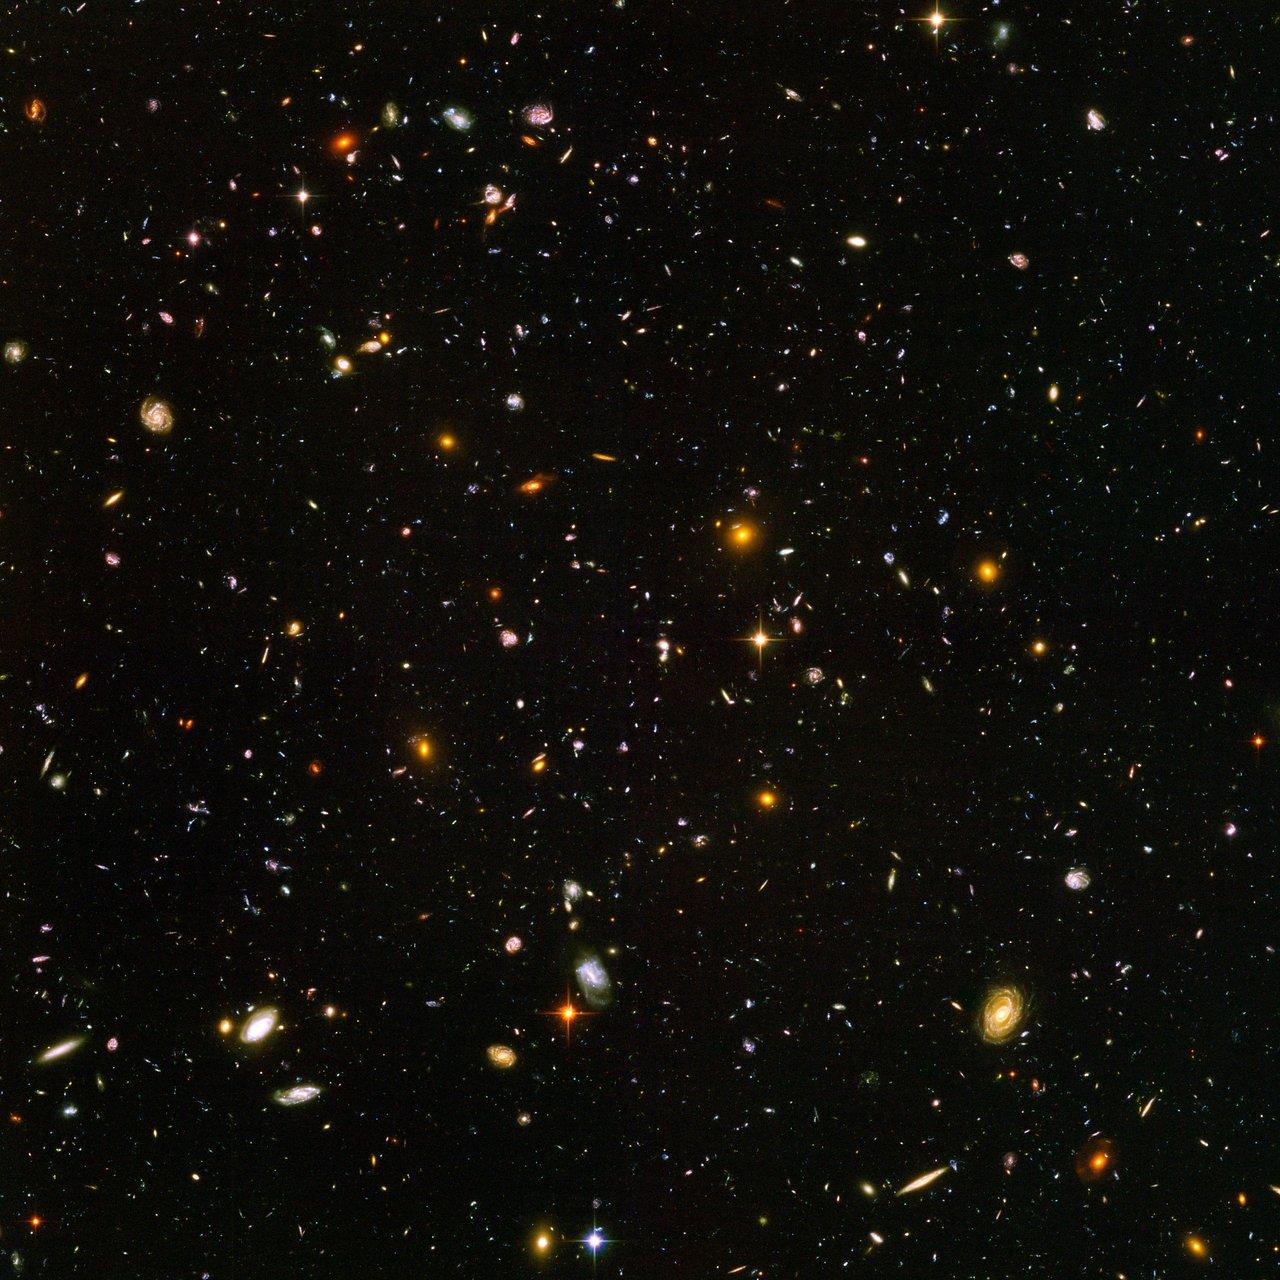 Unknown Color Photograph - 45x60  "Hubble Deep Field" Telescope Space Photography NASA Fine Art Print